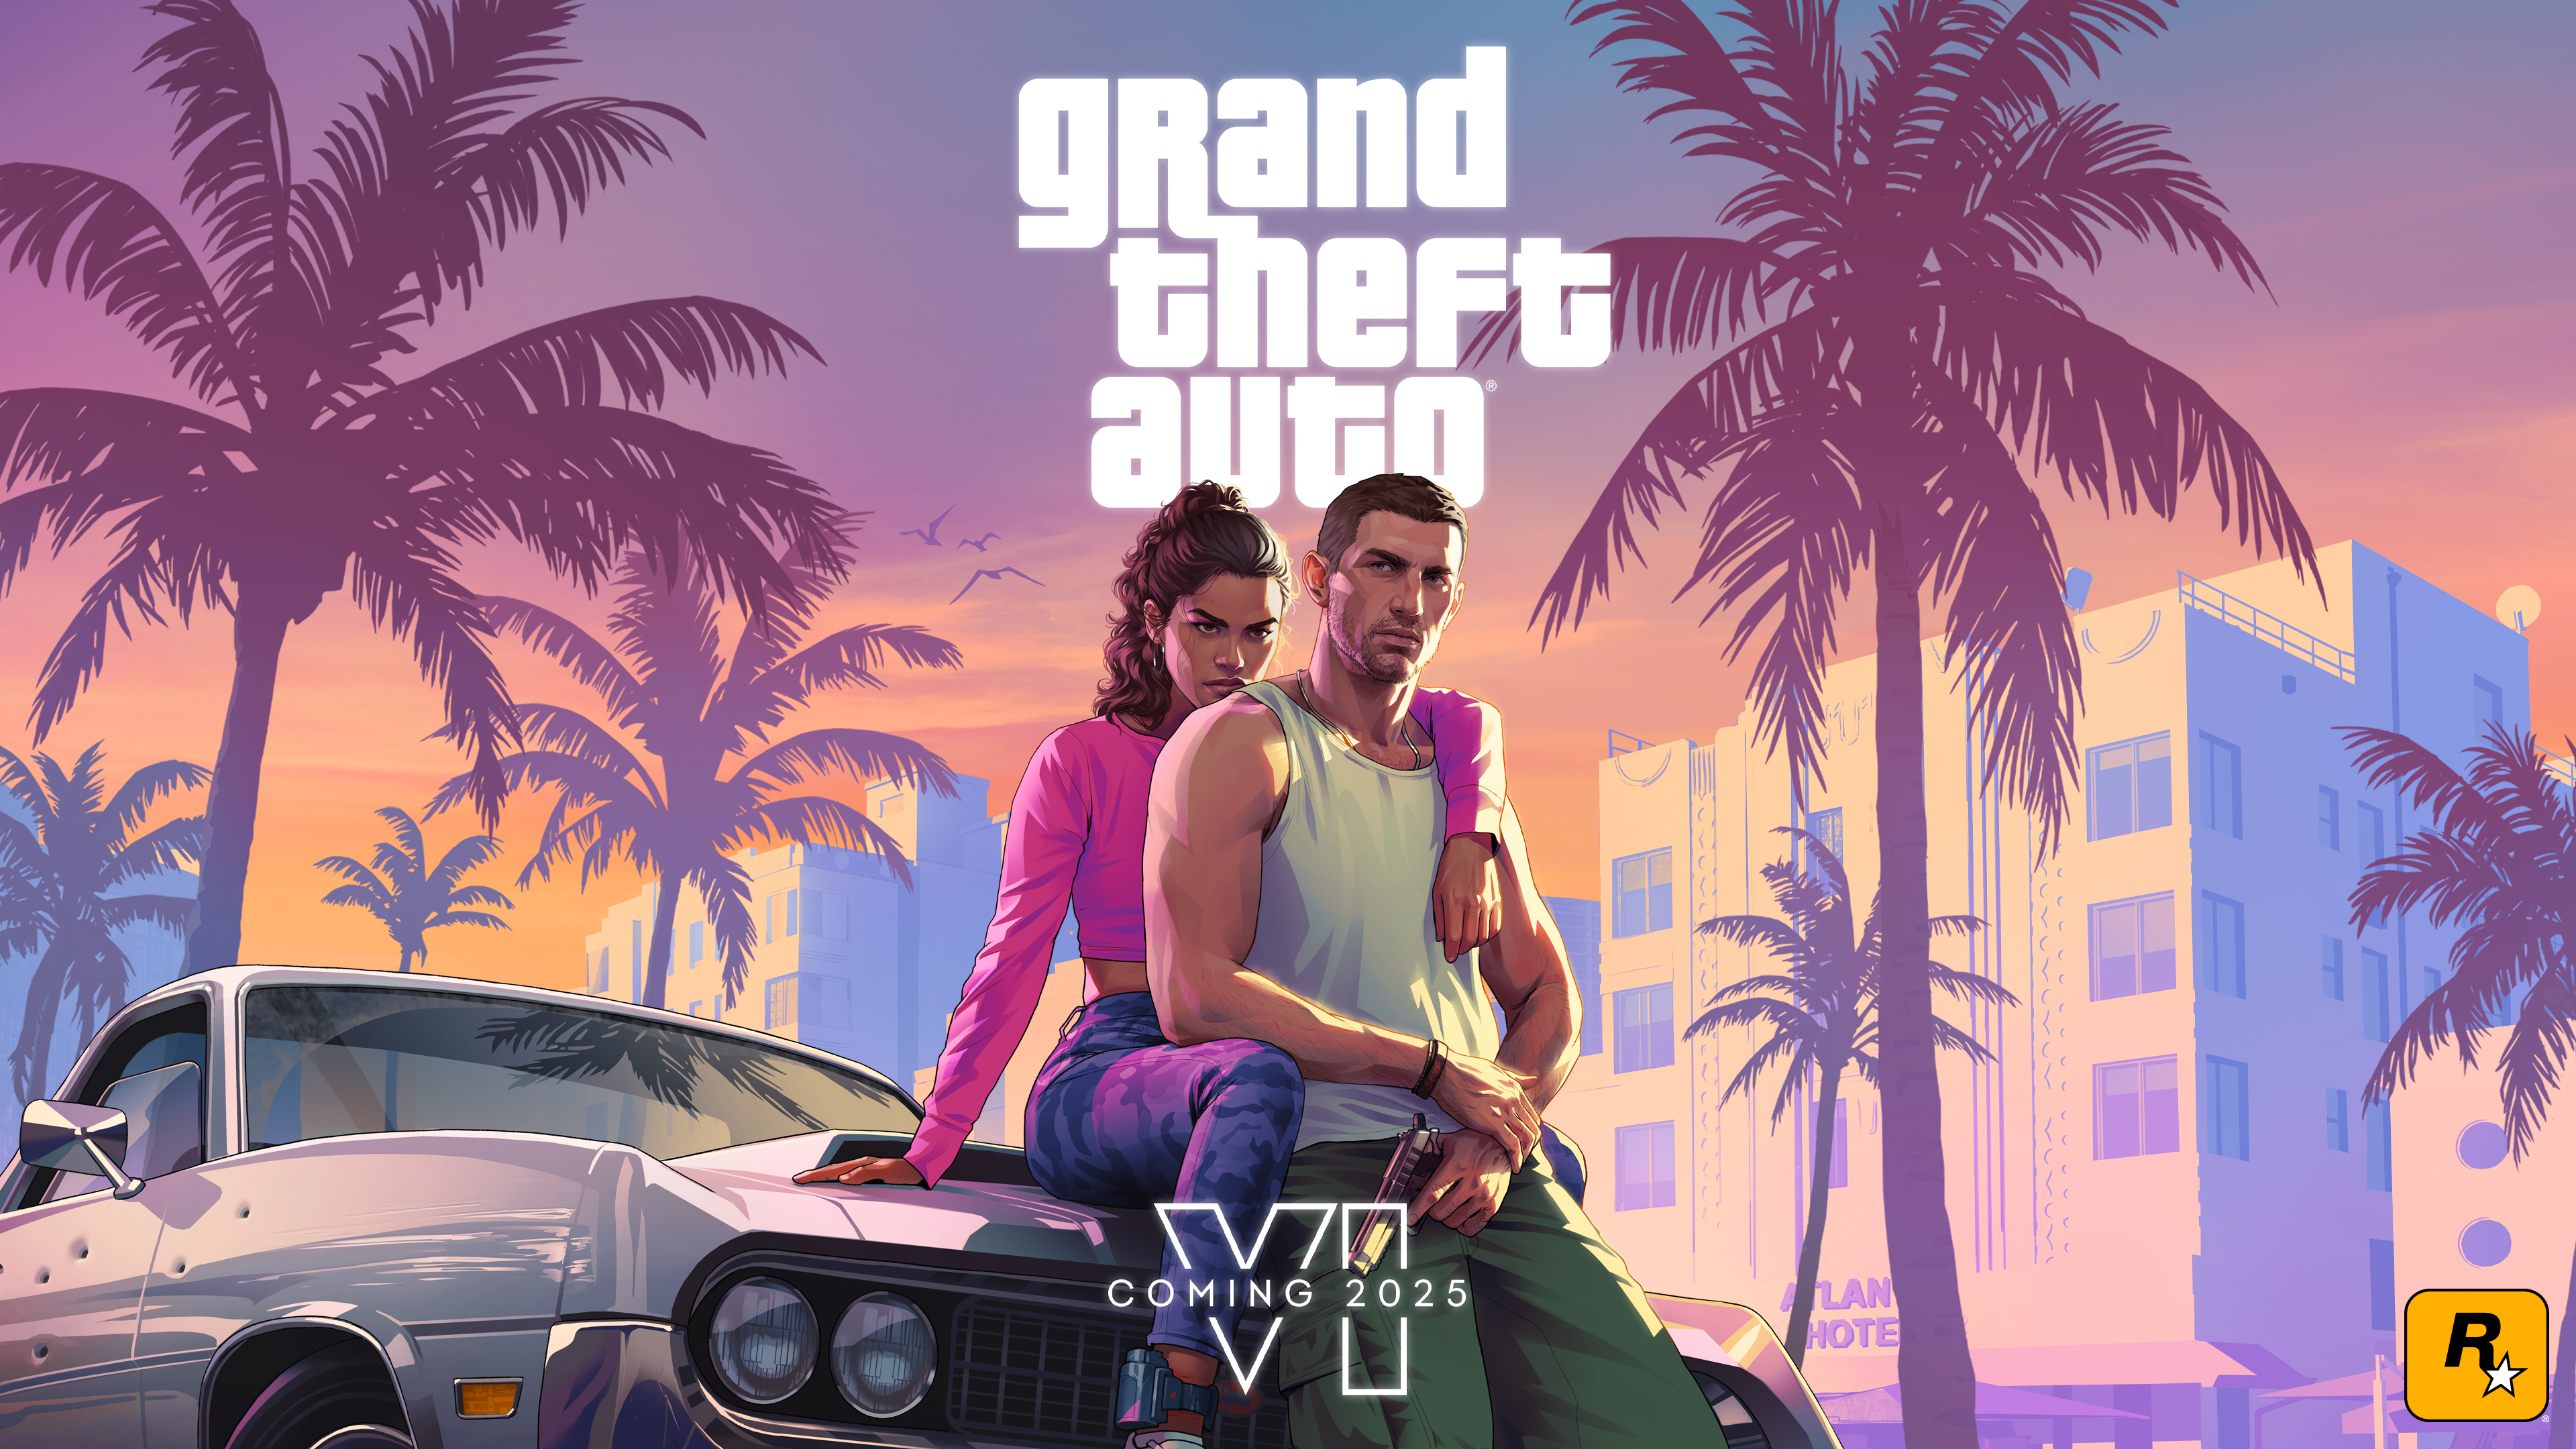 Key art for Grand Theft Auto VI.